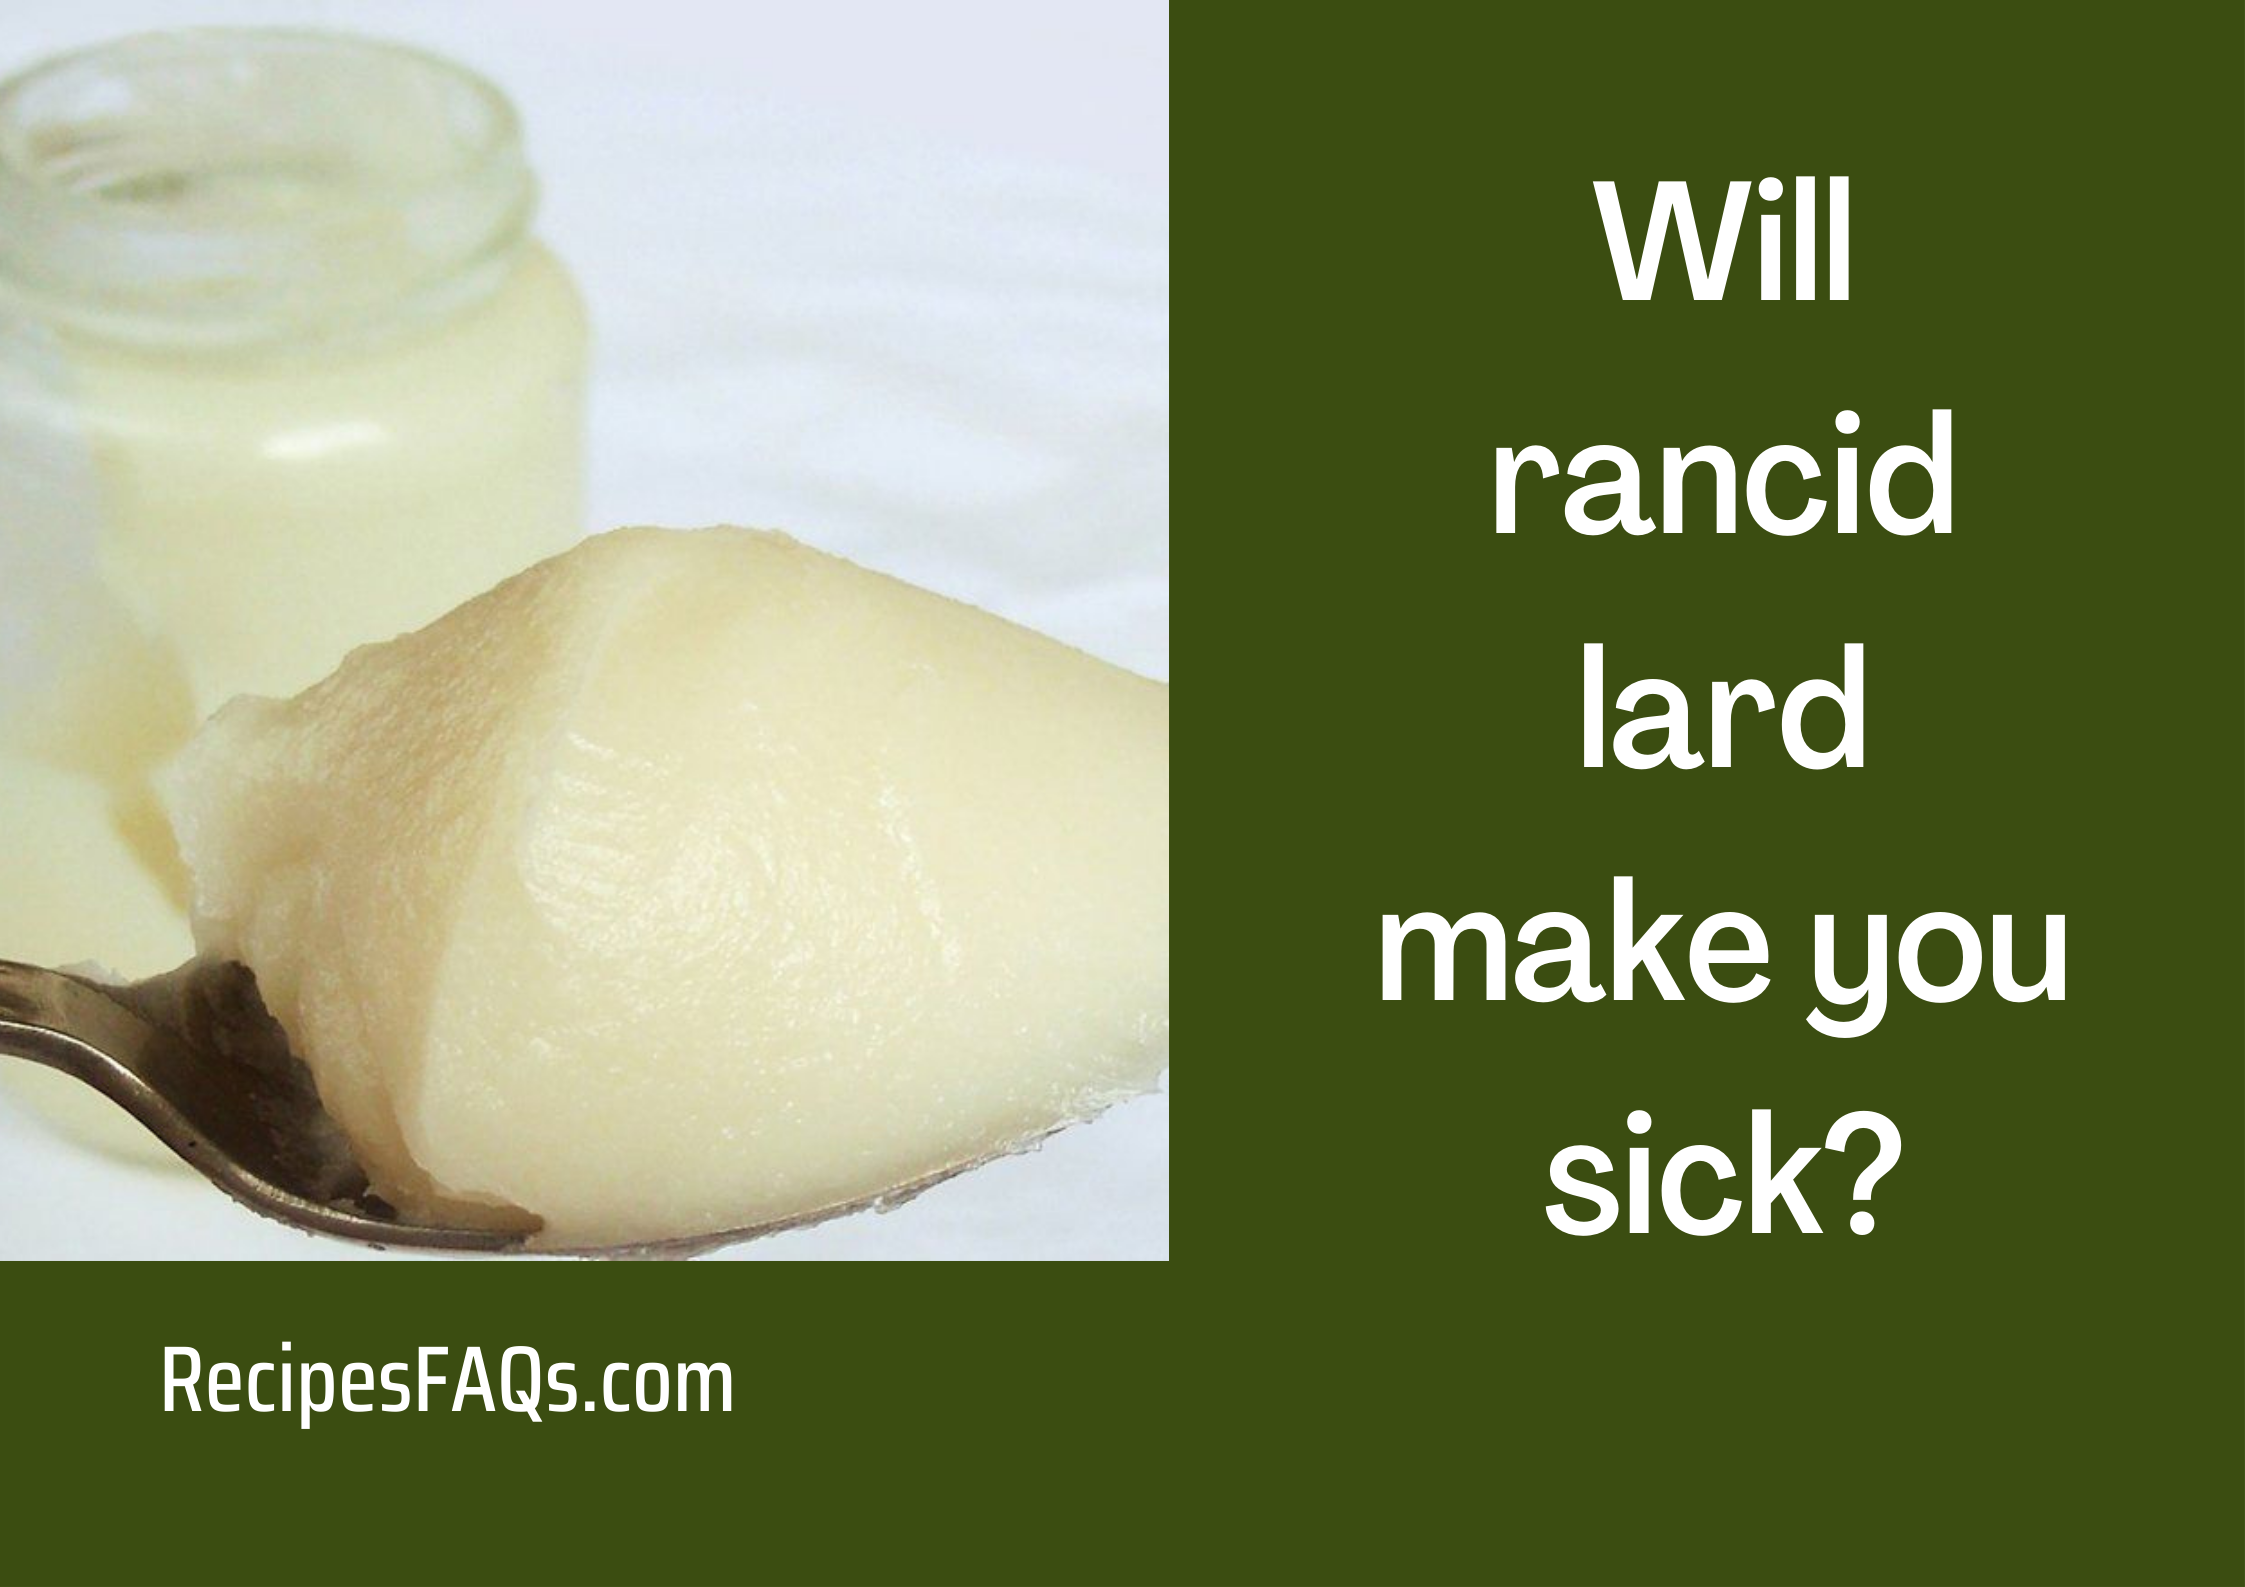 Will rancid lard make you sick?